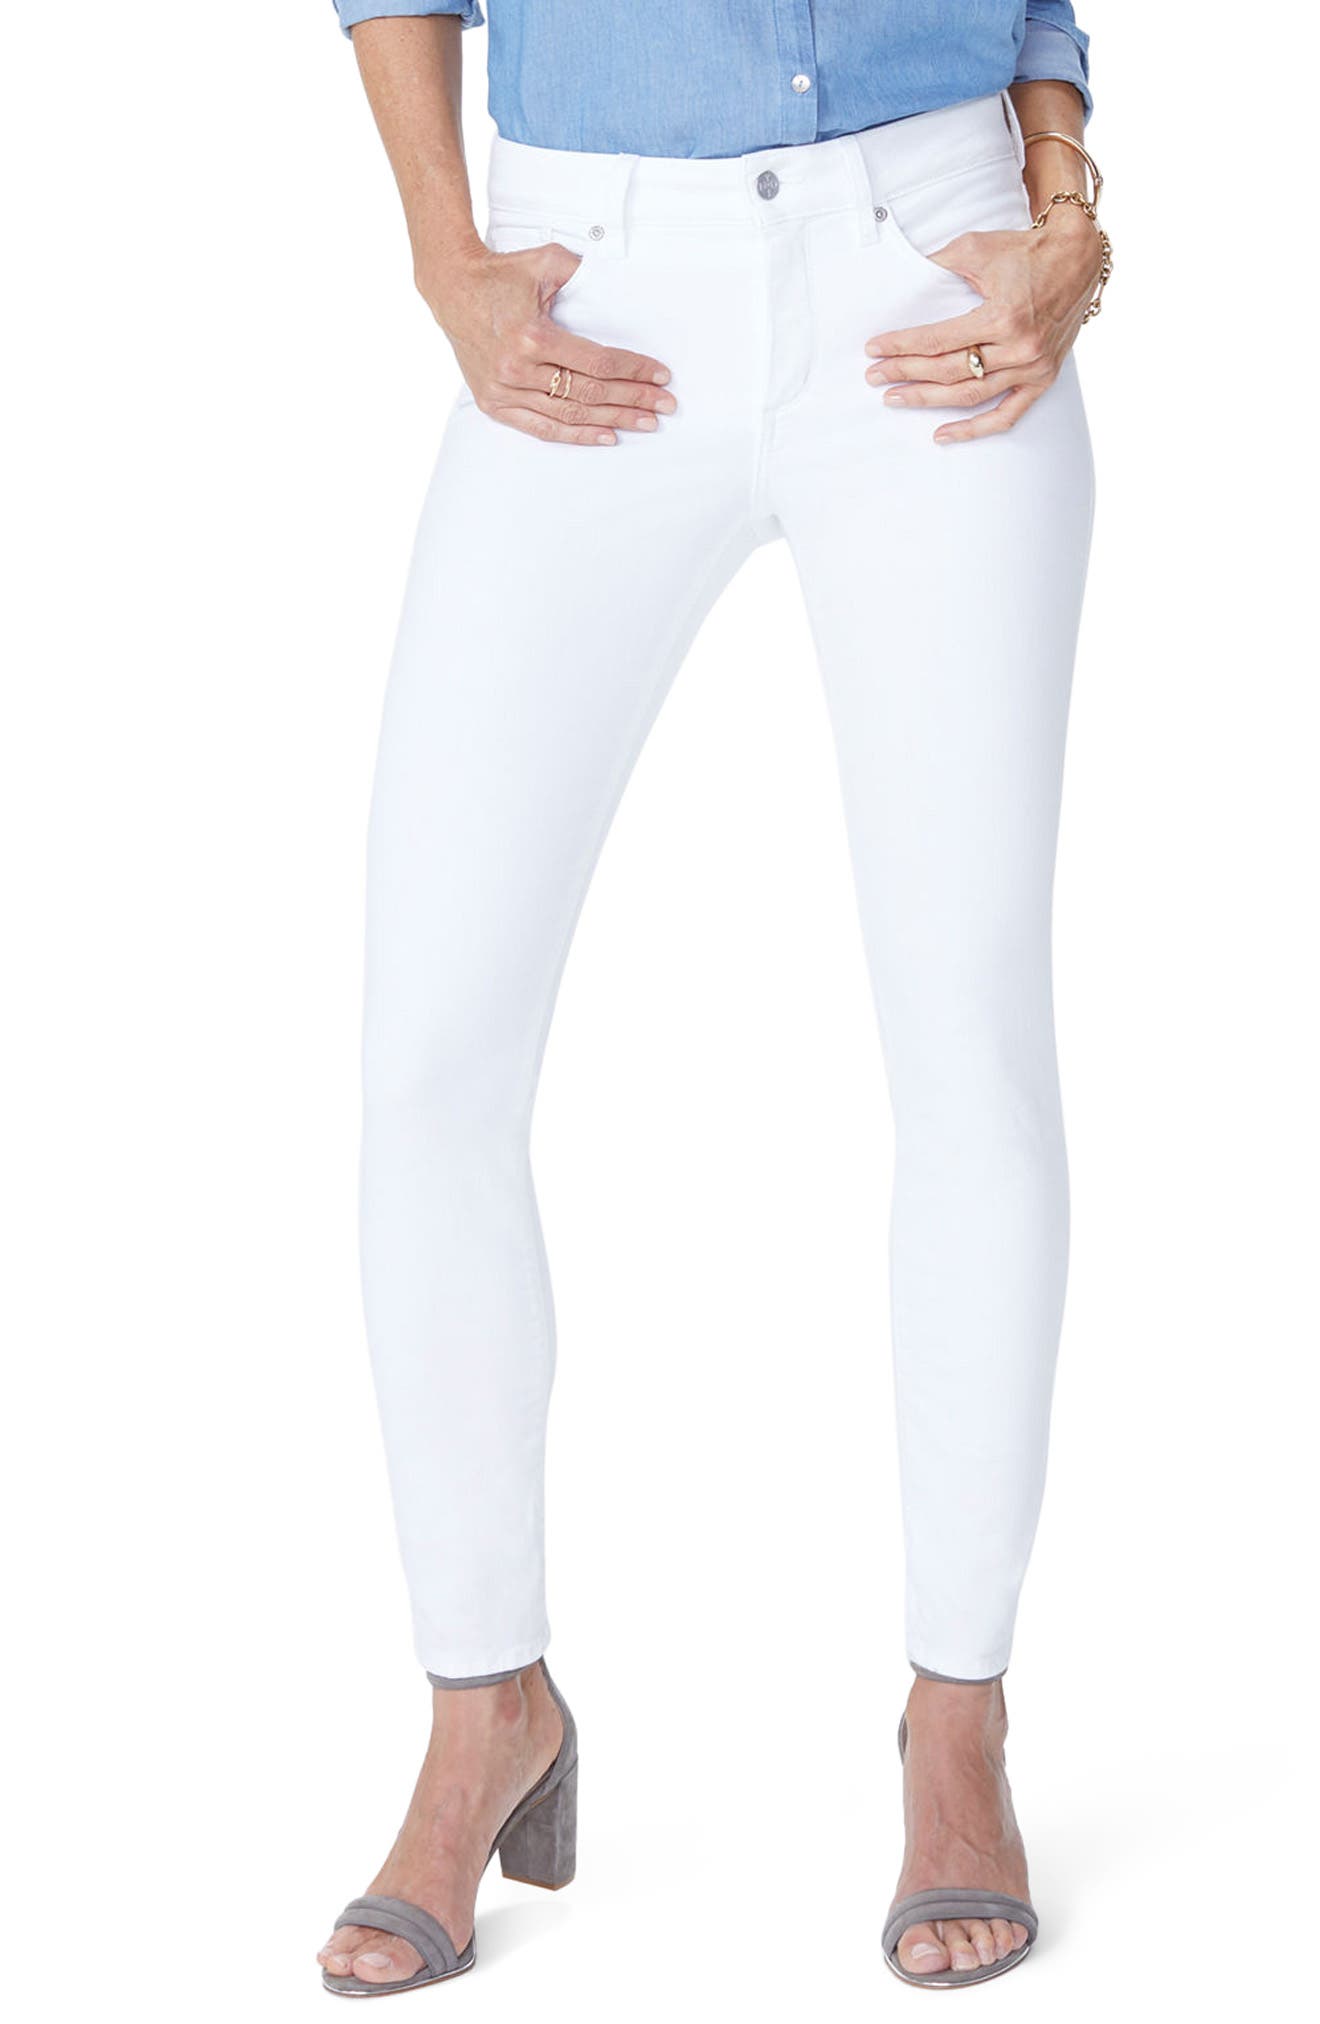 white skinny jeans size 16